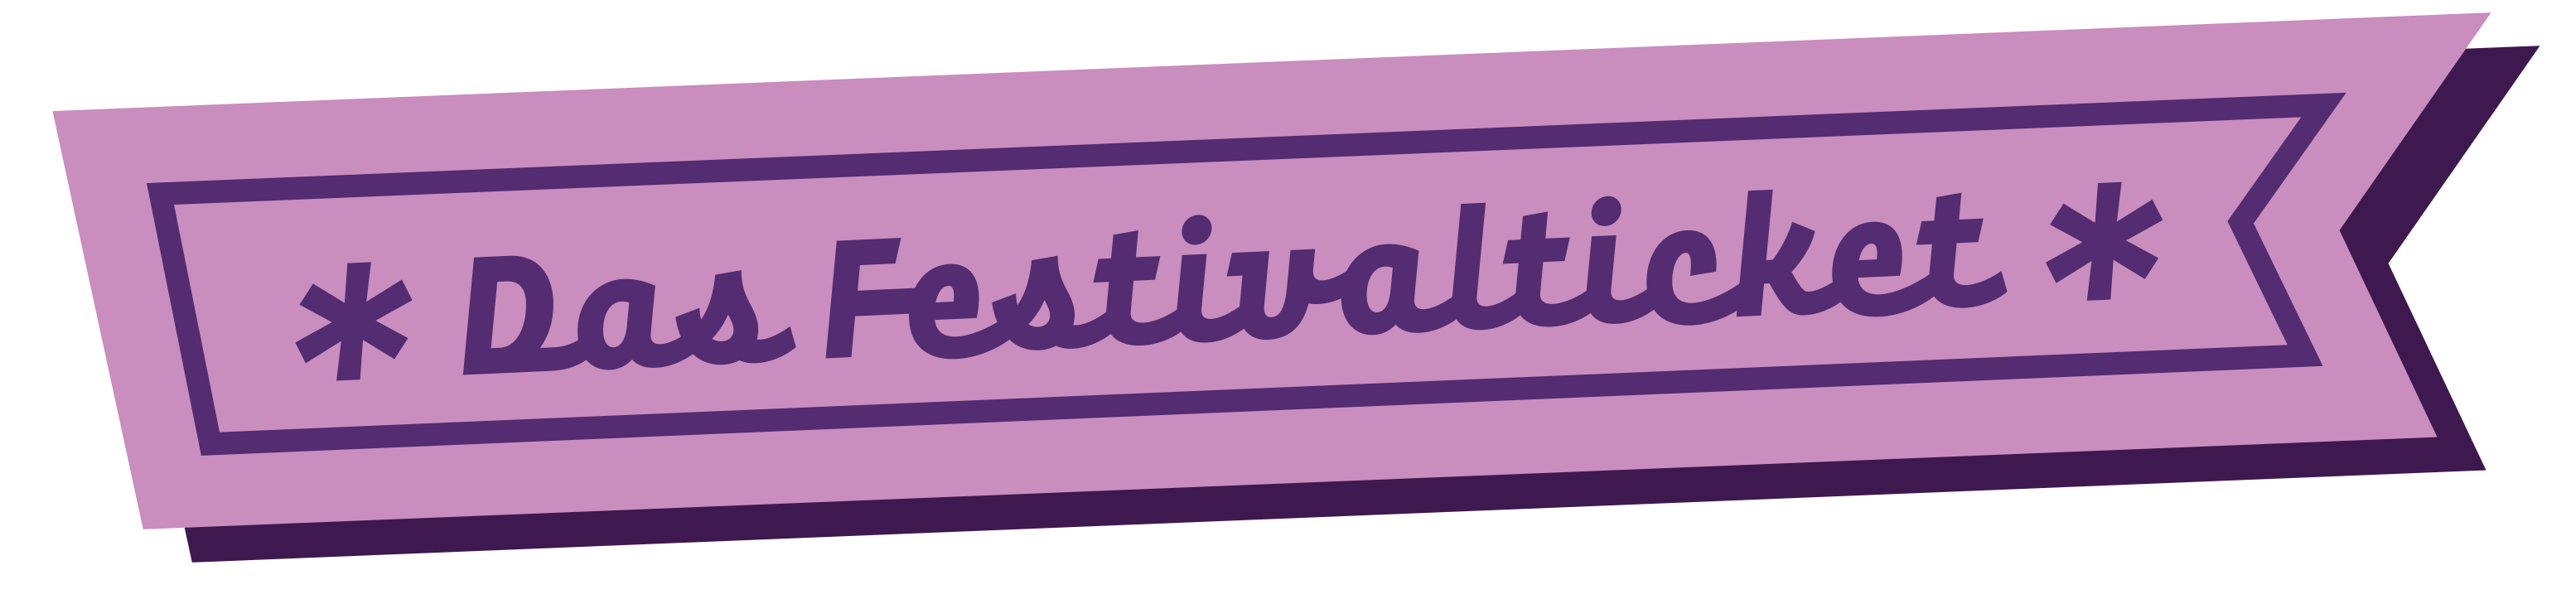 Das Festivalticket